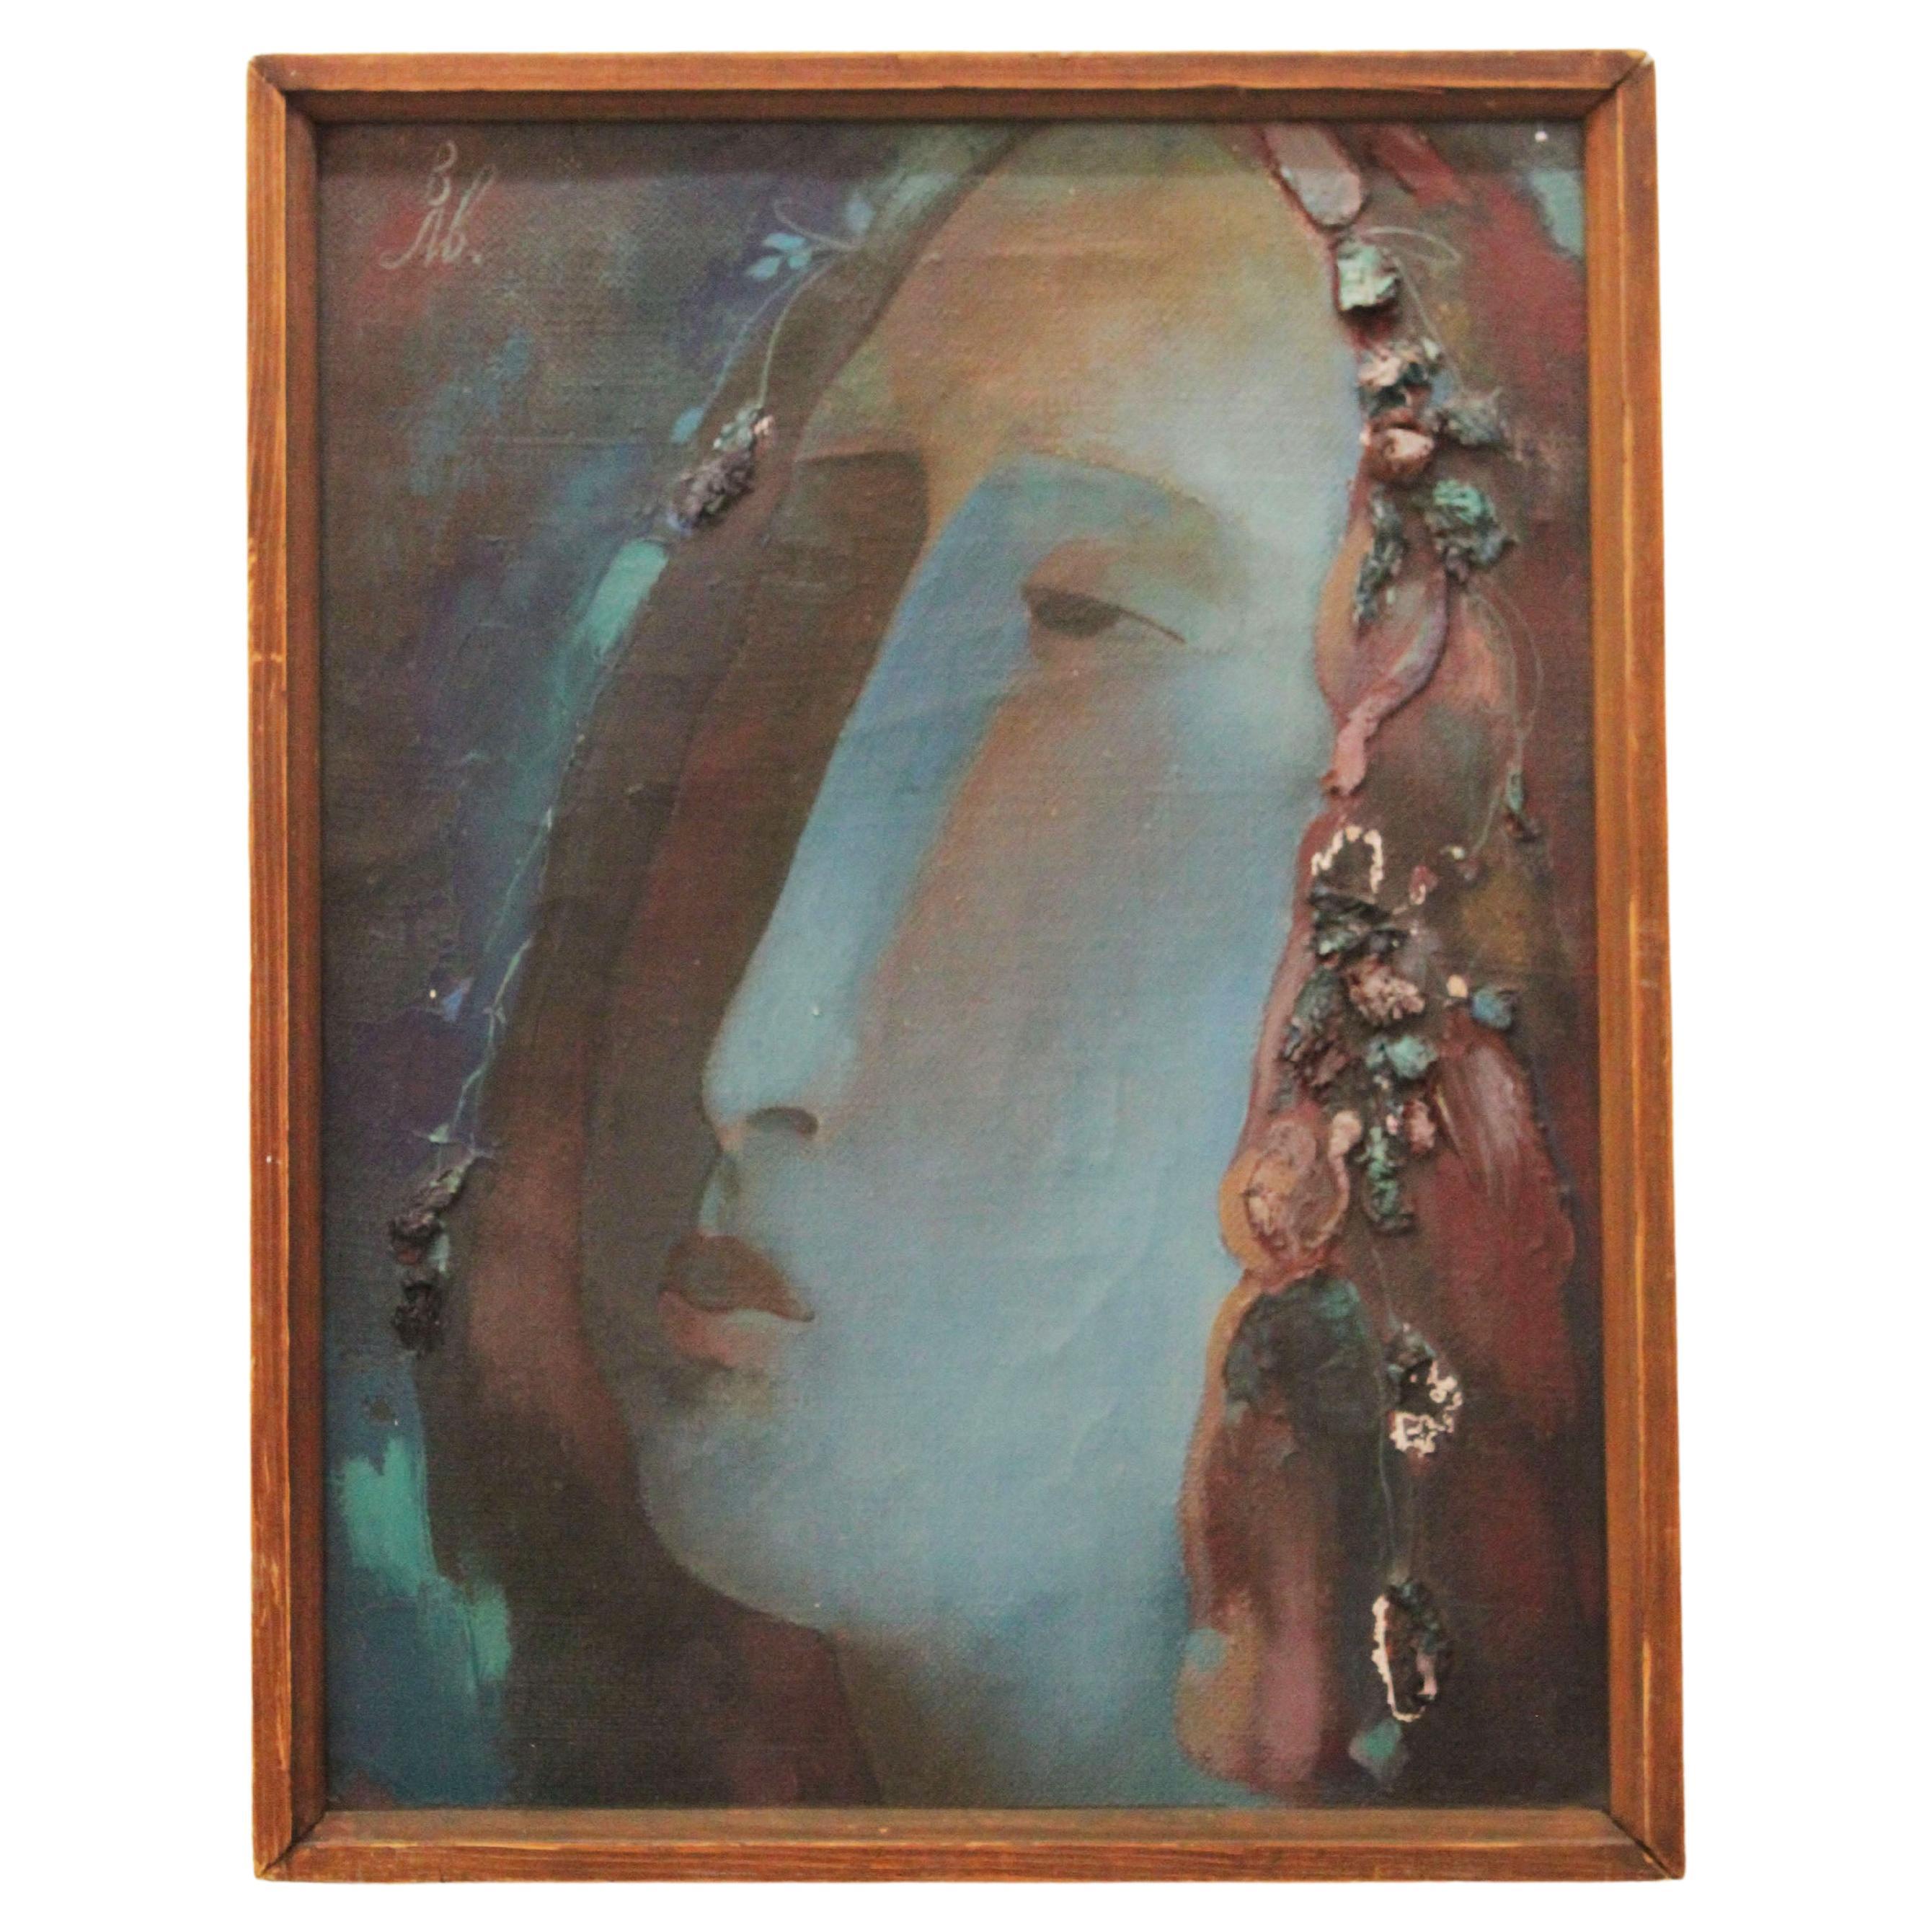 Avekina Valentina, Gemälde, 1992, Öl auf Leinwand